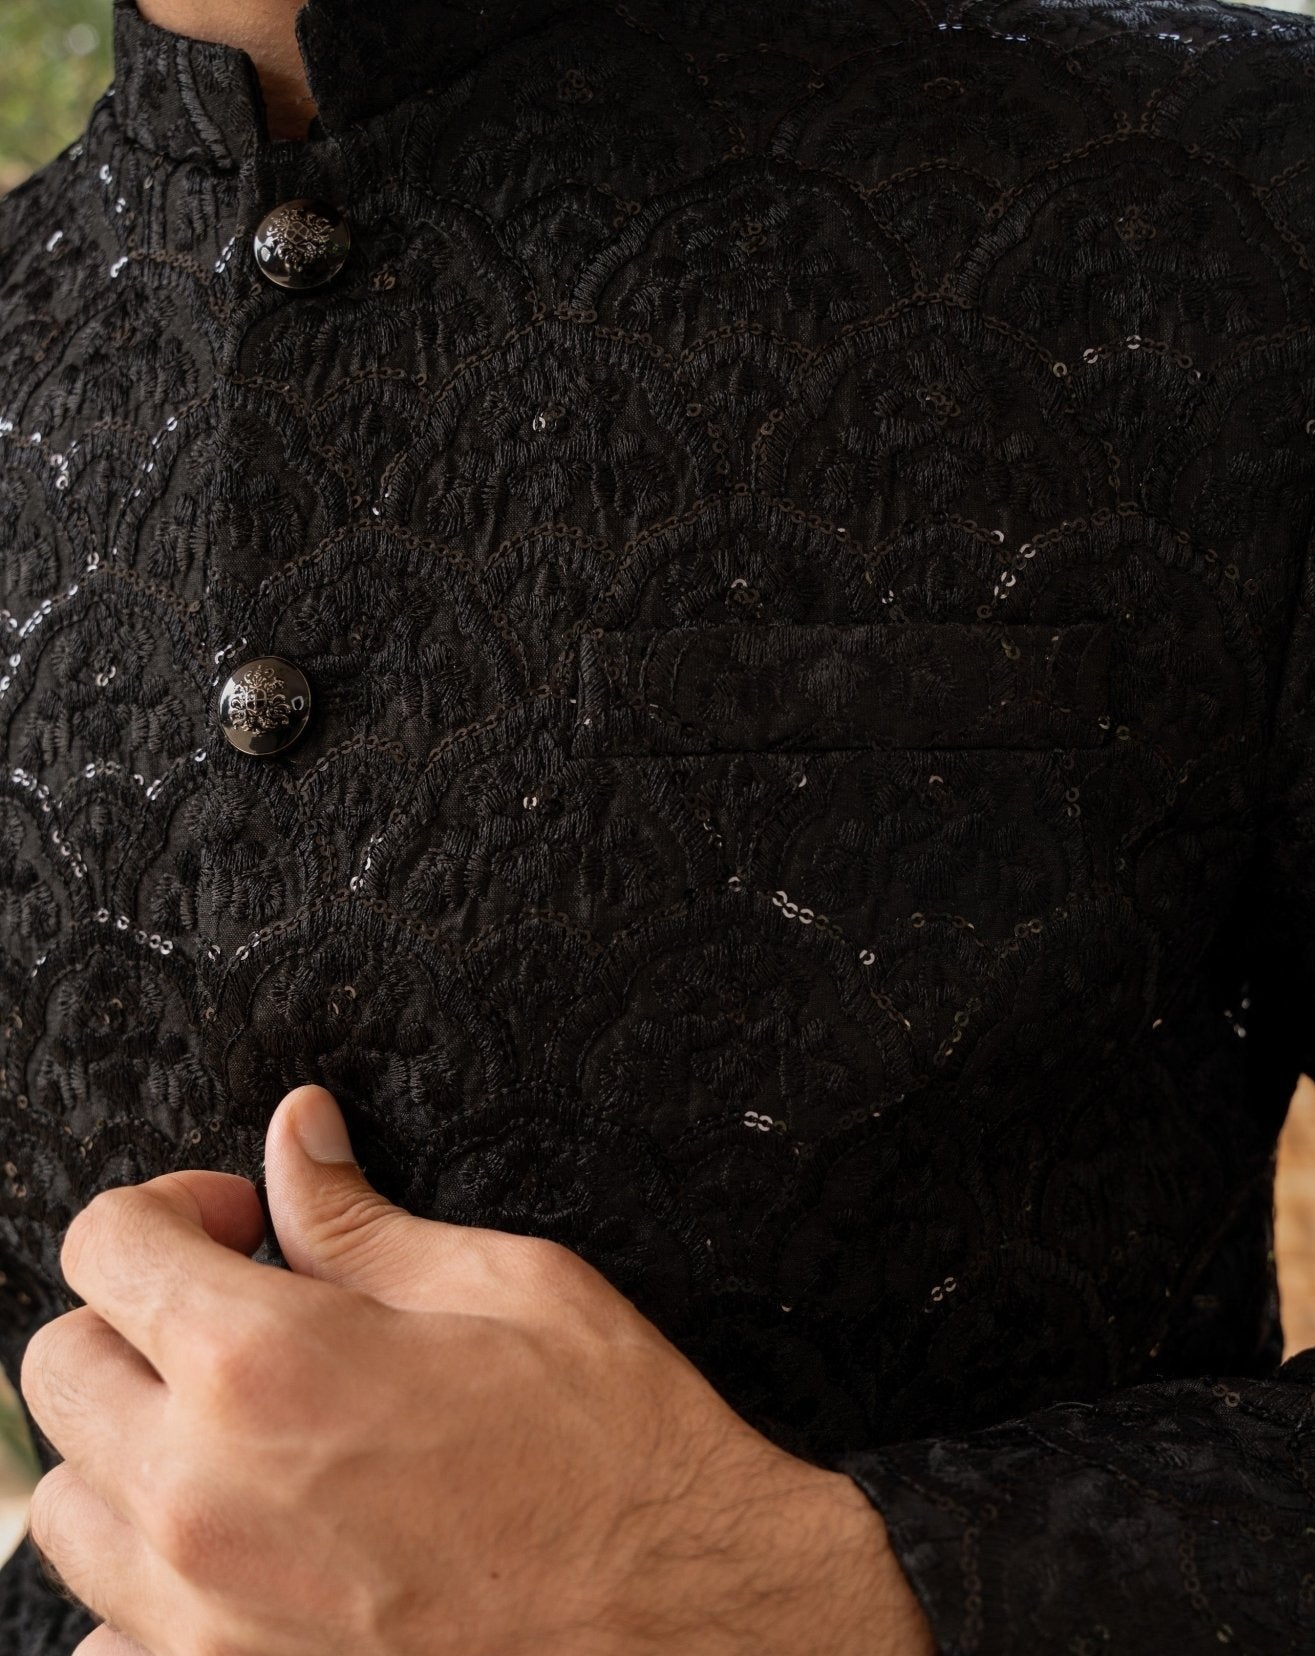 Sequin Prince Coat on Black - 3 Piece - MuraqshMuraqsh Man